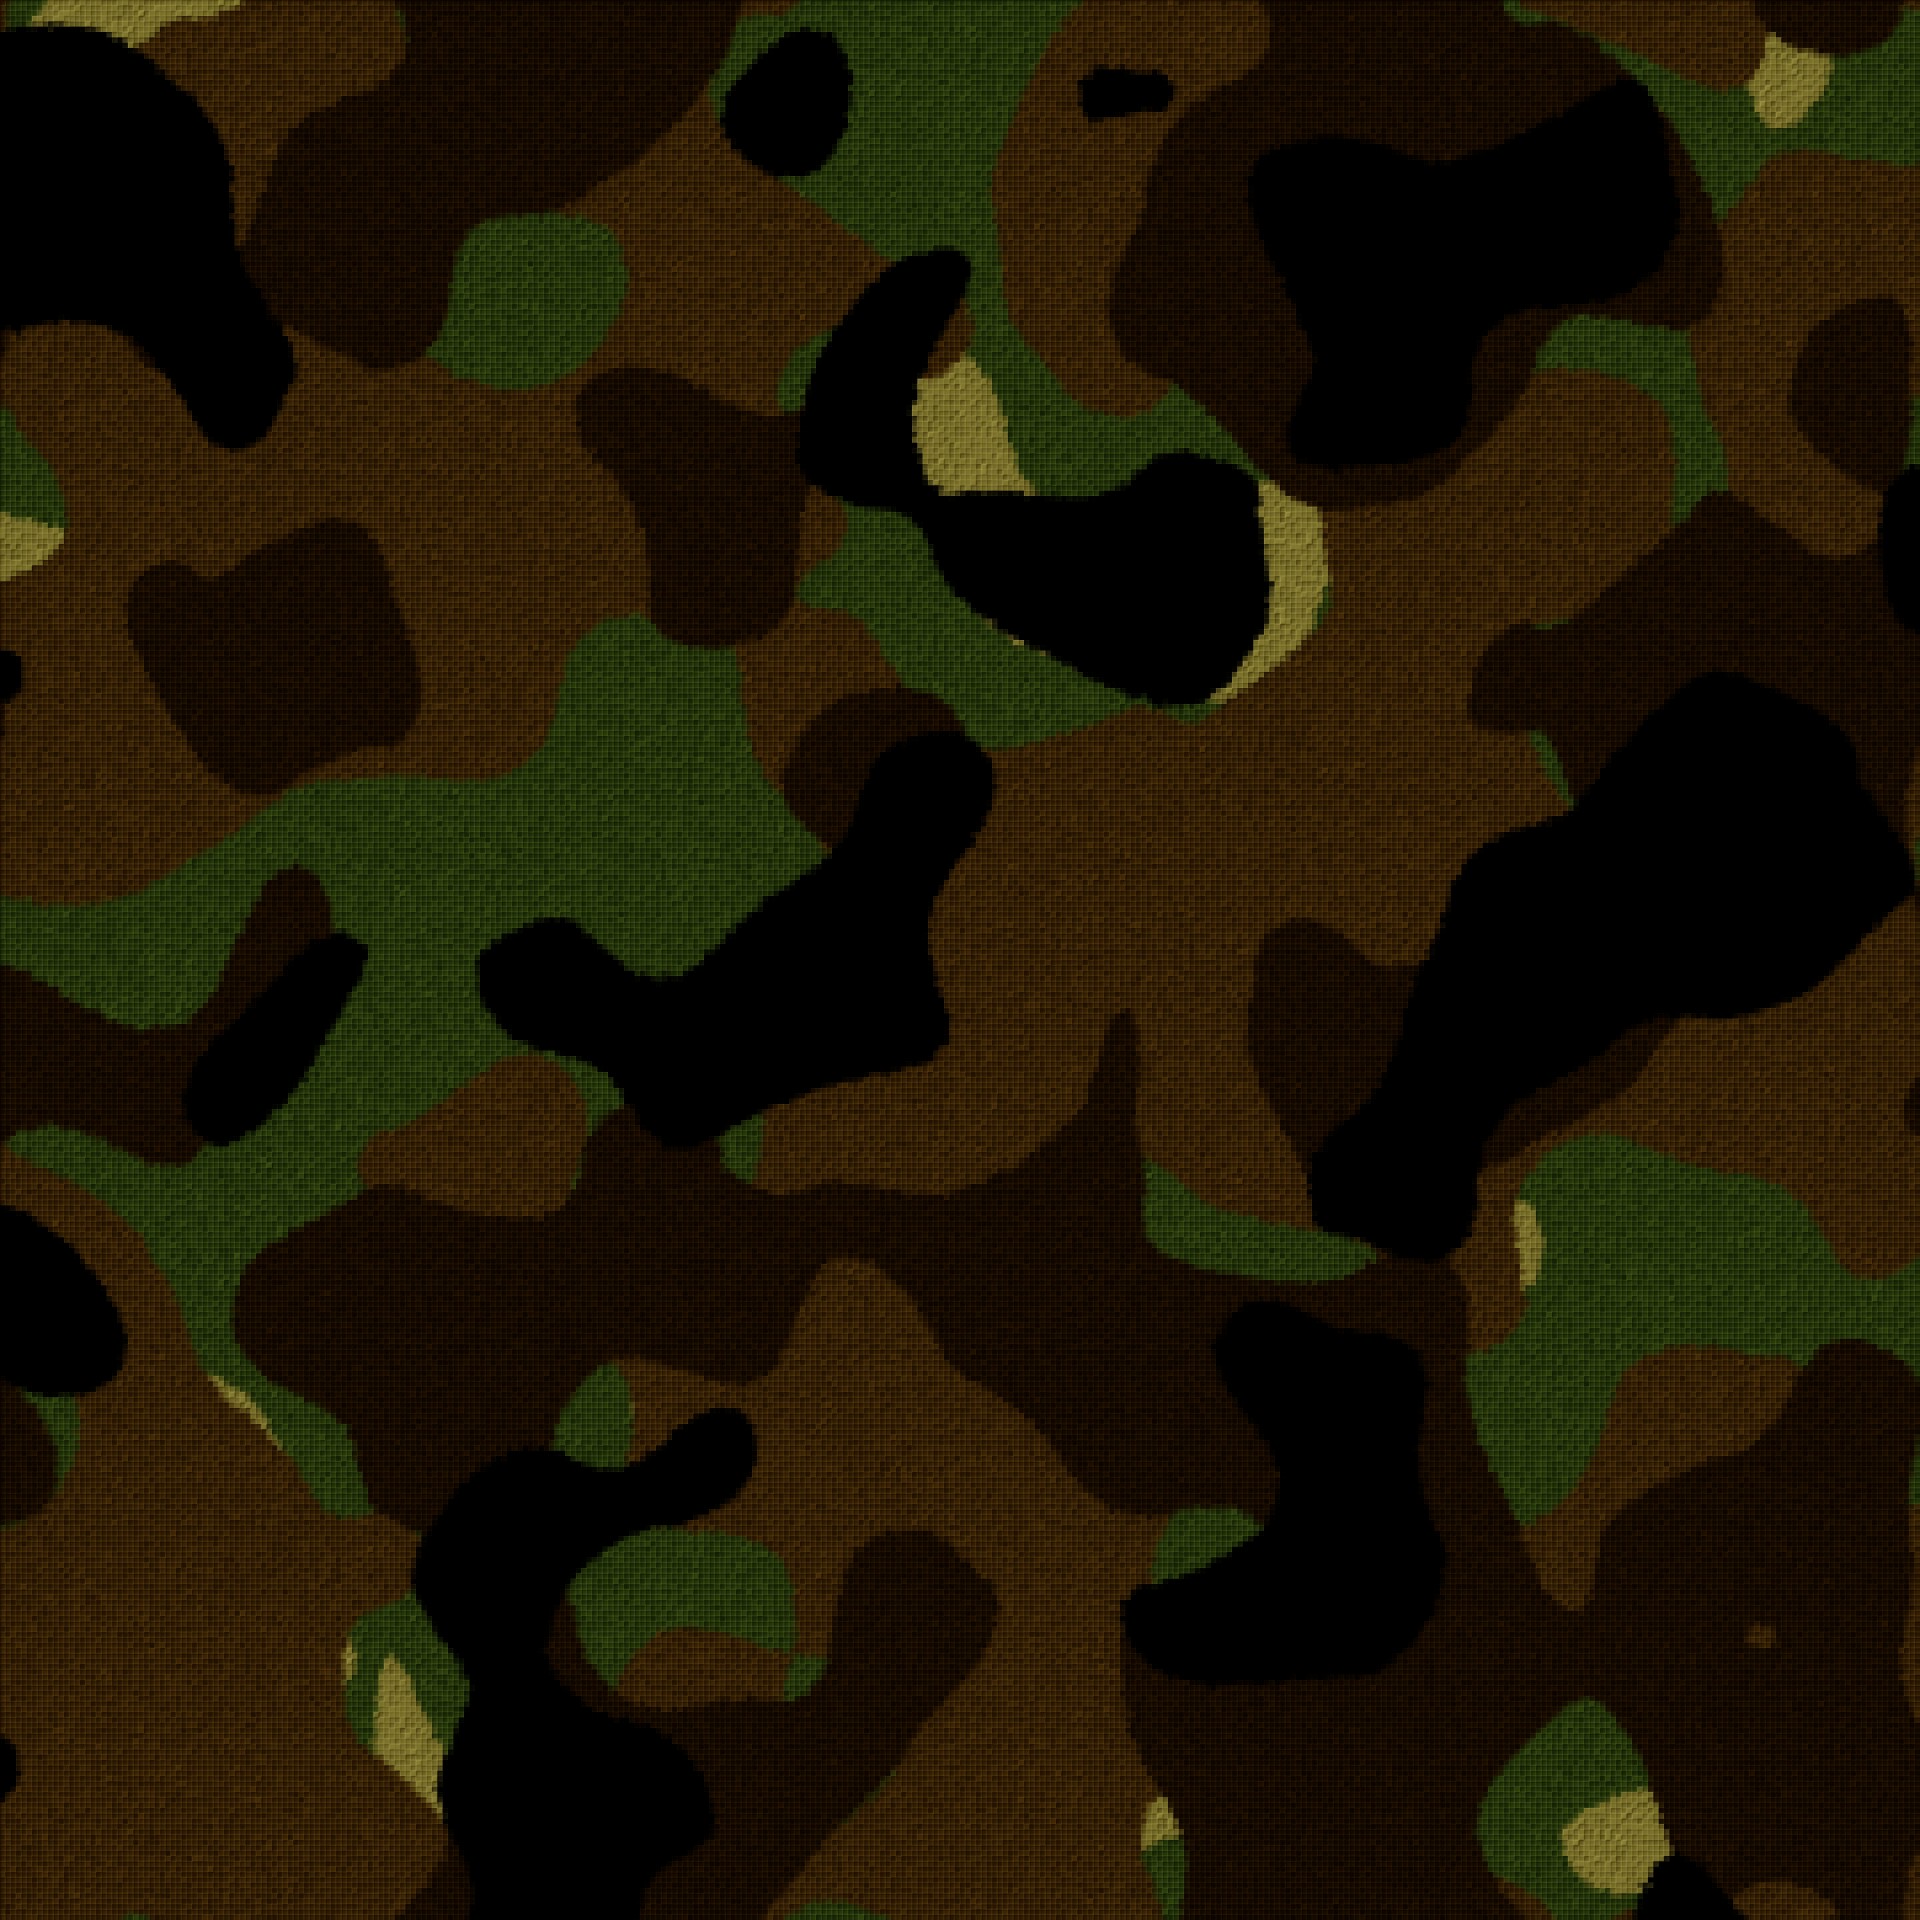 camouflage camo pattern free photo